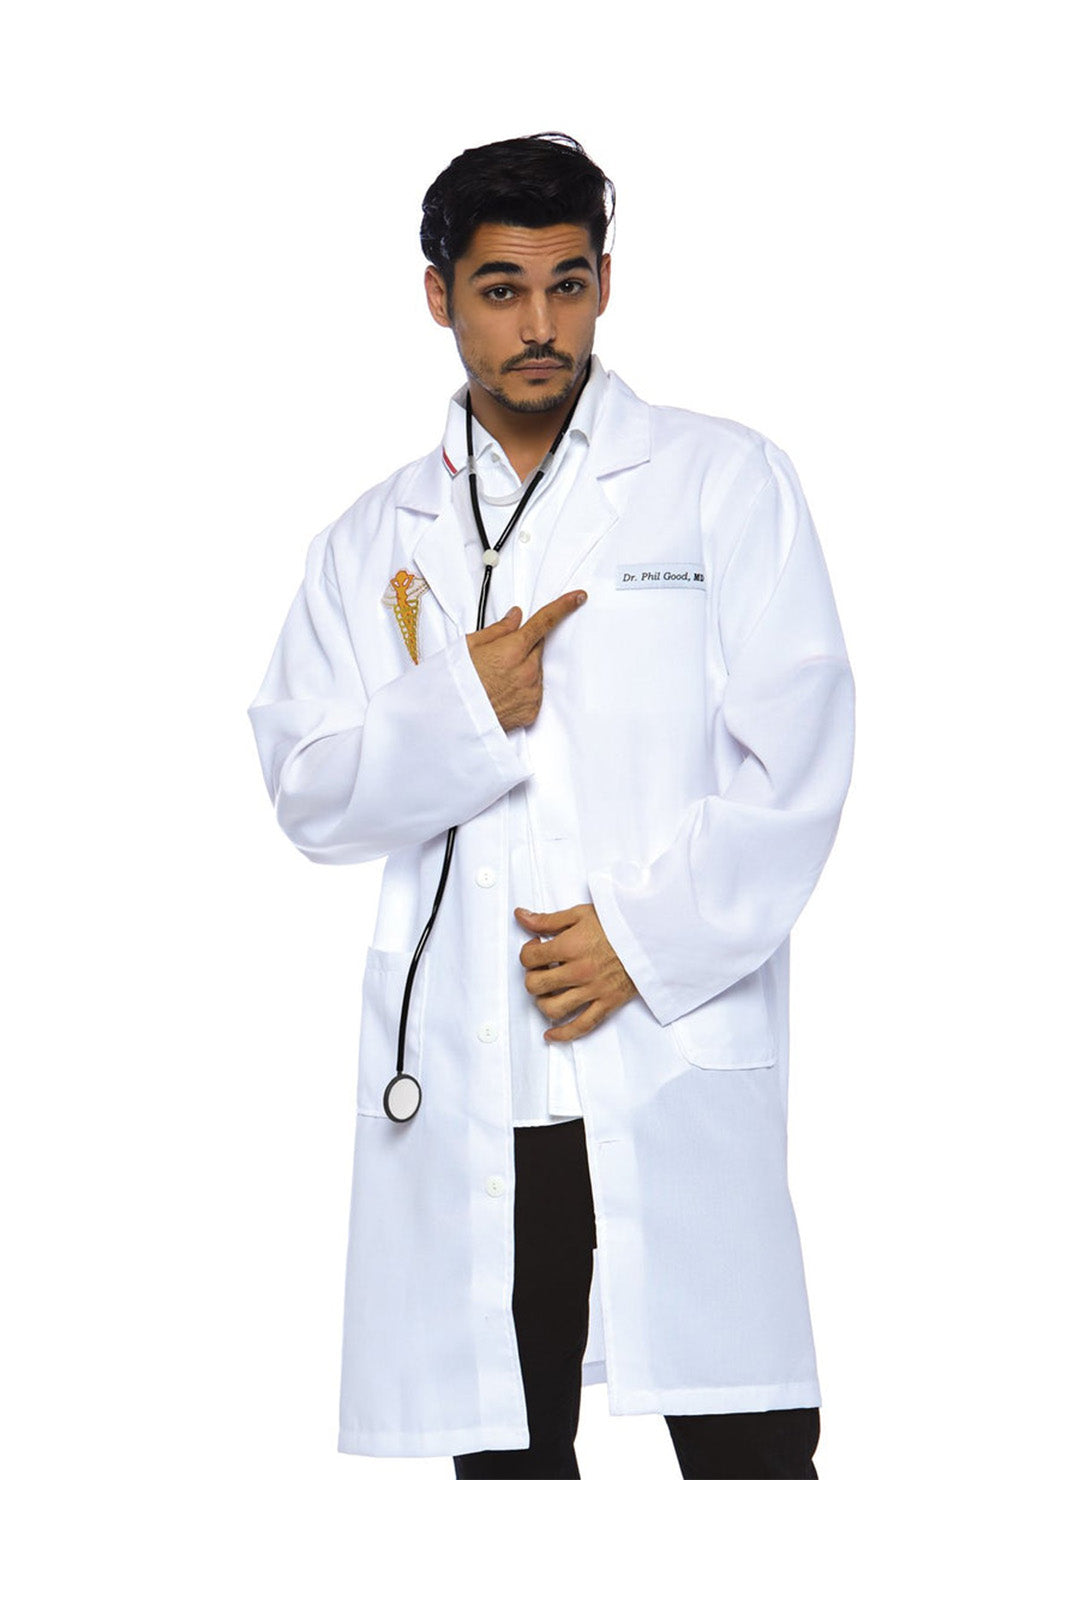 Dr. Phil Good Men's Doctor Costume